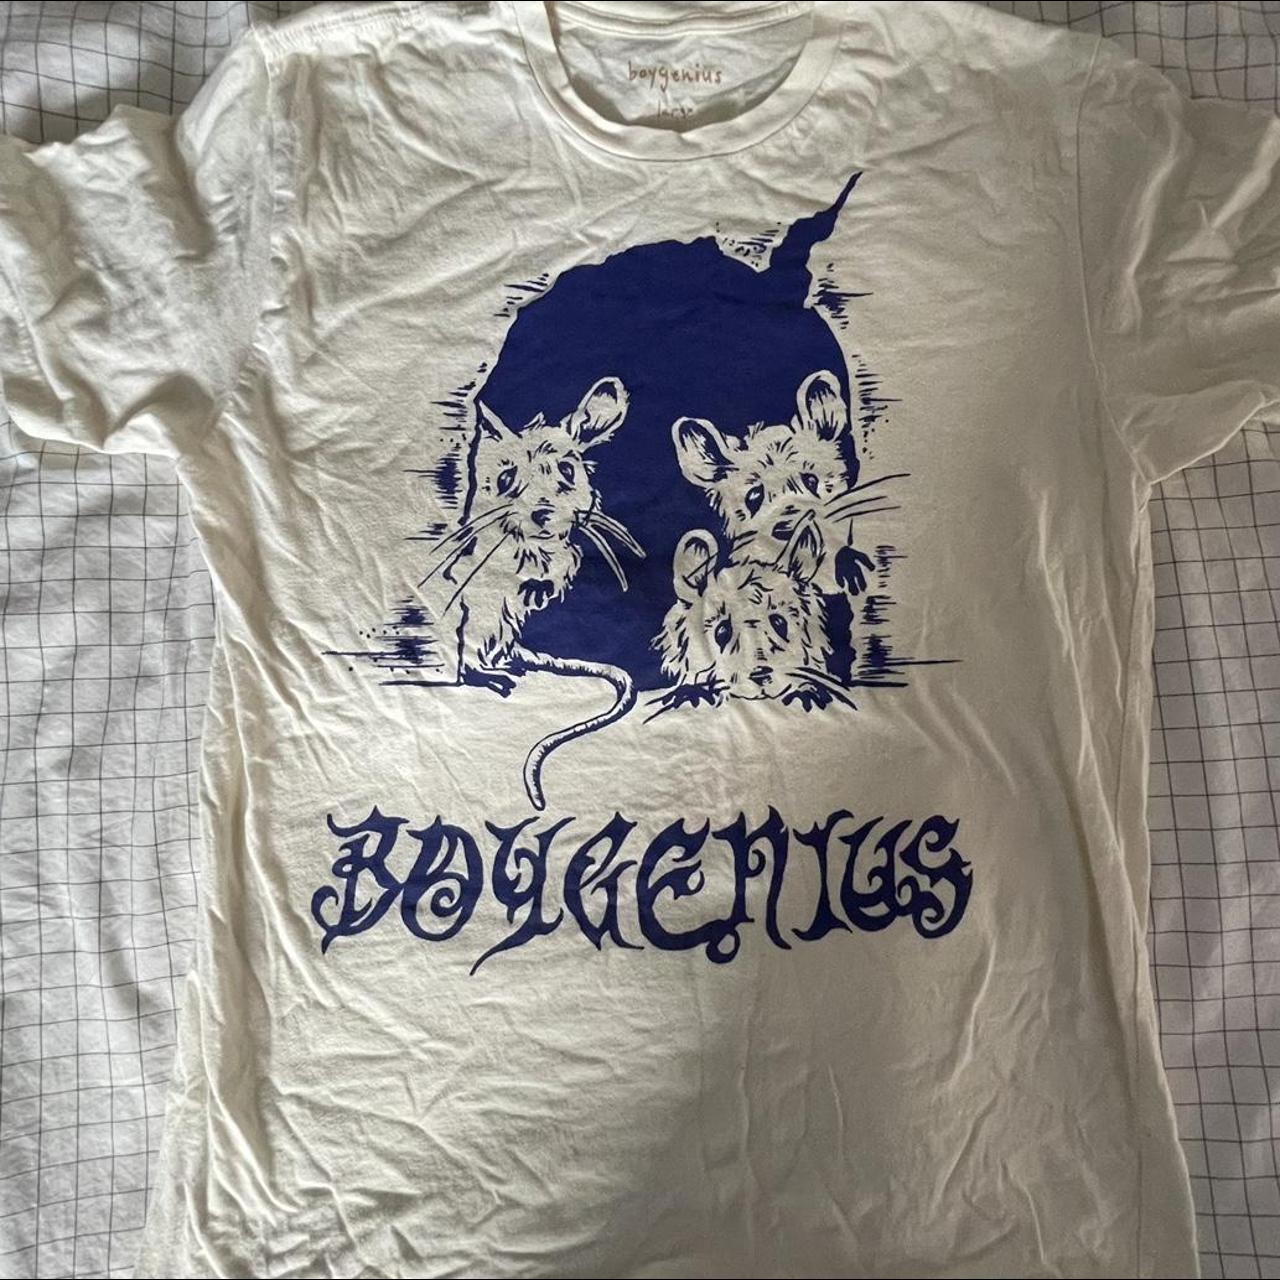 boygenius t-shirt 3 mice in size (L) worn once,... - Depop